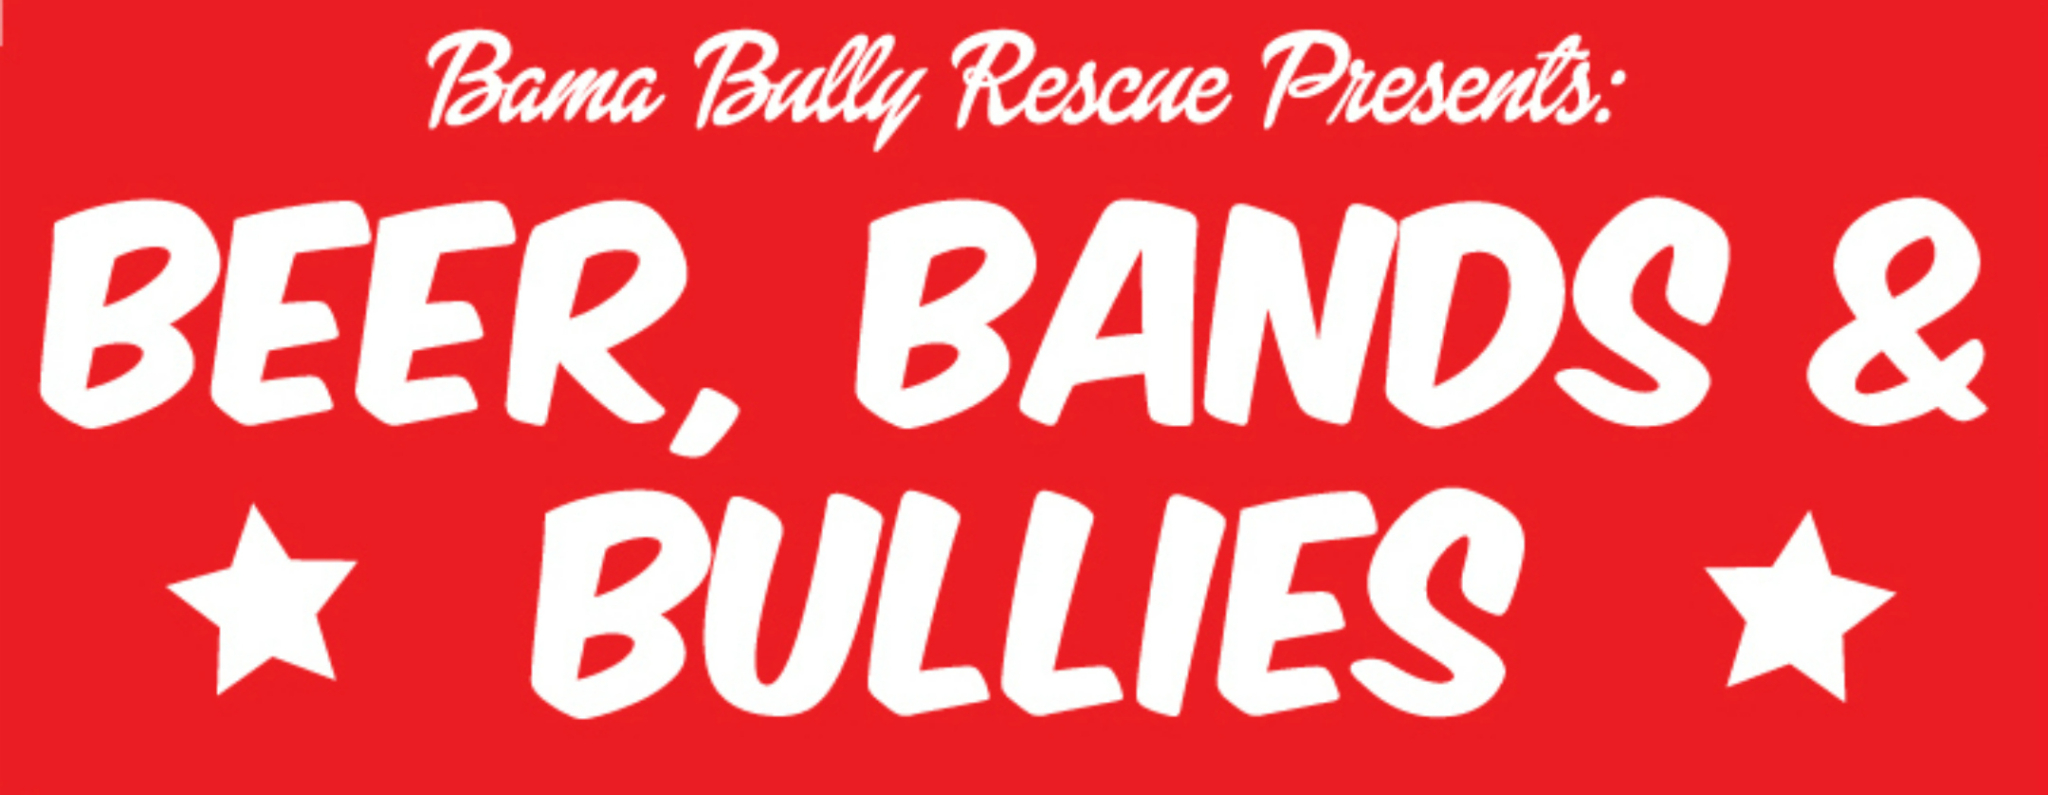 Bama Bullies FB Banner scaled Beer, Bands & Bullies